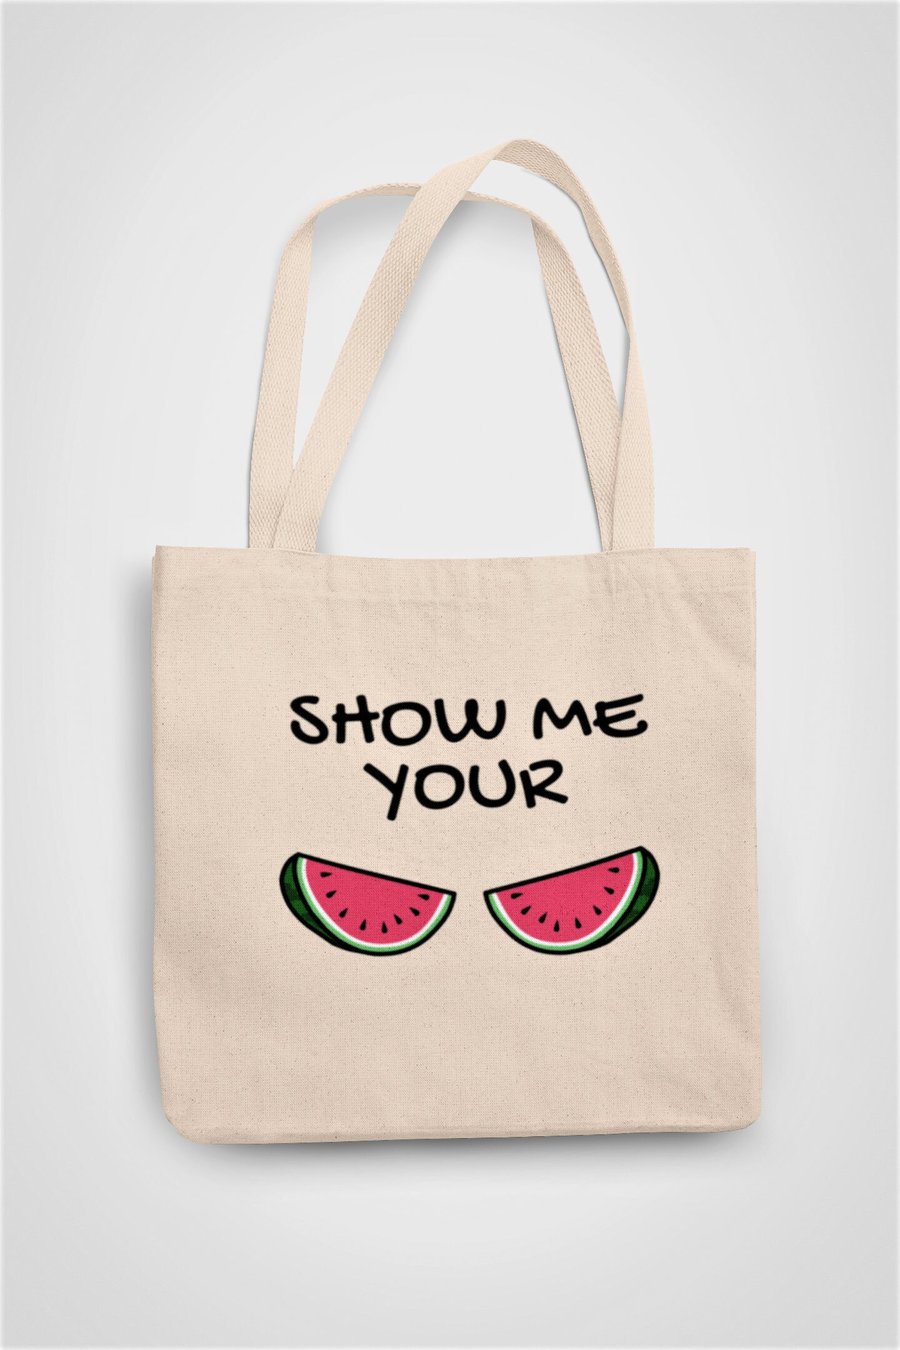 Show me your Melons Tote Bag Reusable Cotton bag - funny birthday present gift -